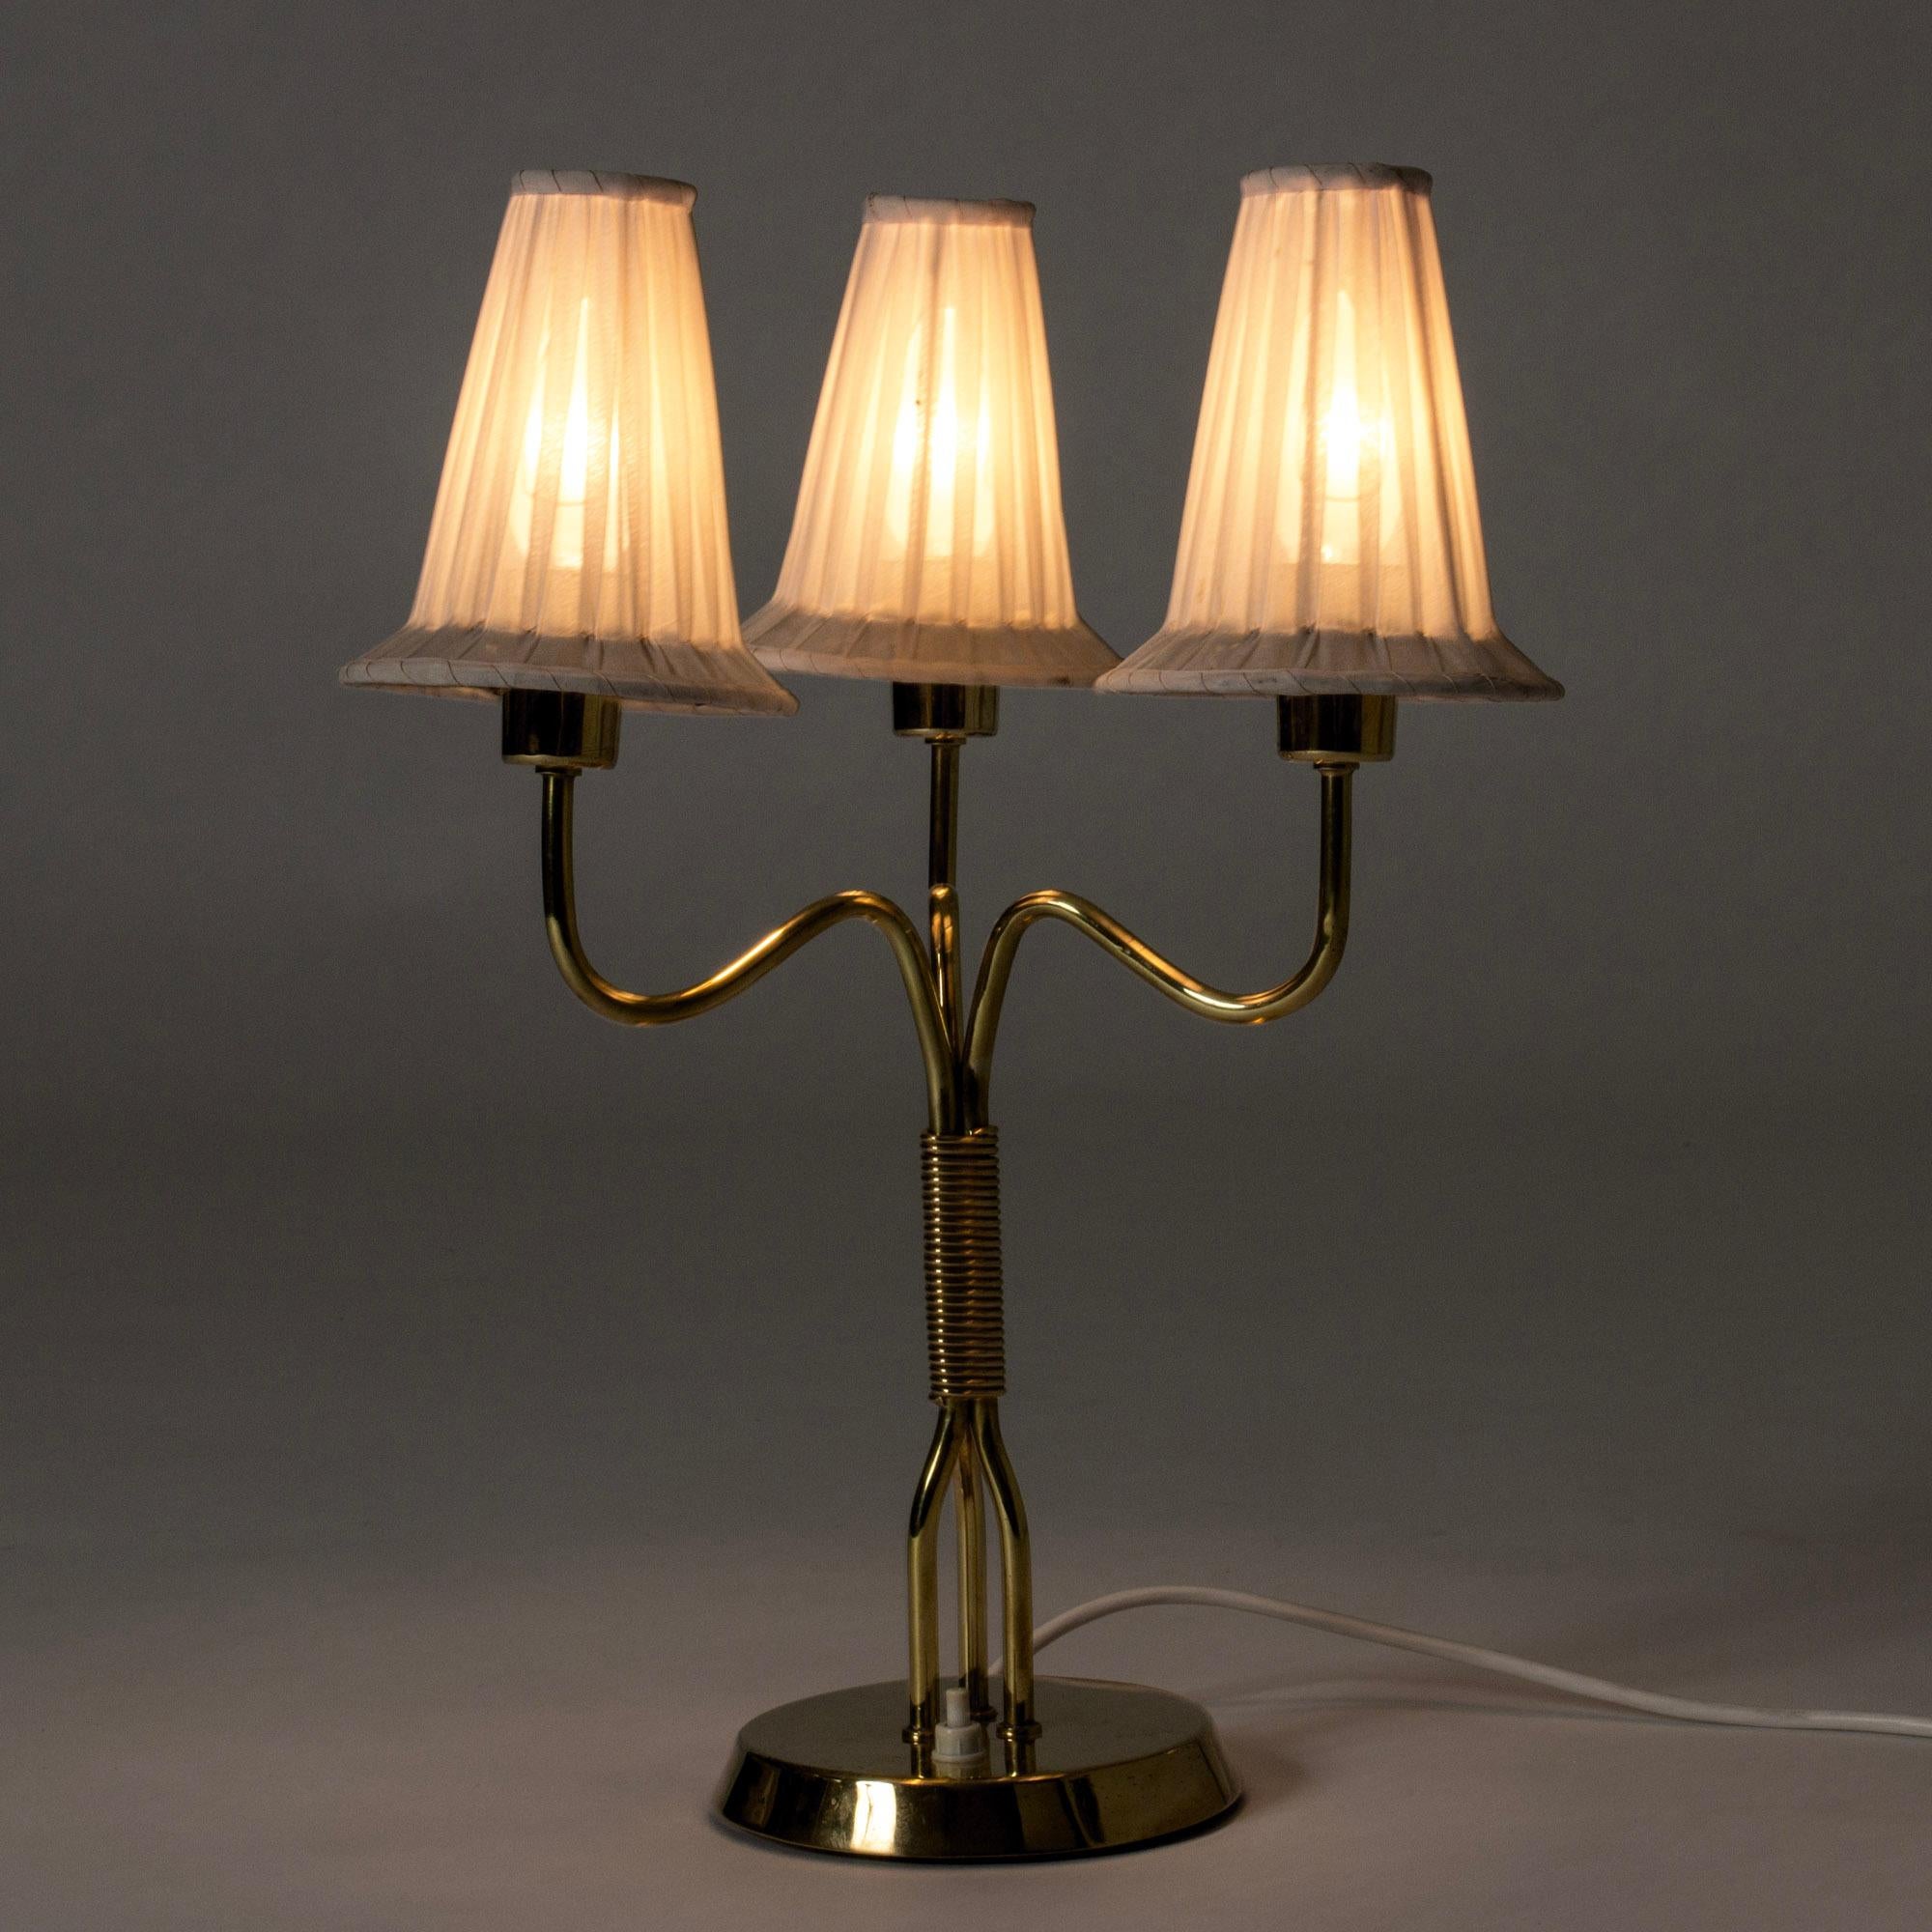 Scandinavian Modern Table Lamp, Hans Bergström, Ateljé Lyktan, Sweden, 1940s For Sale 1